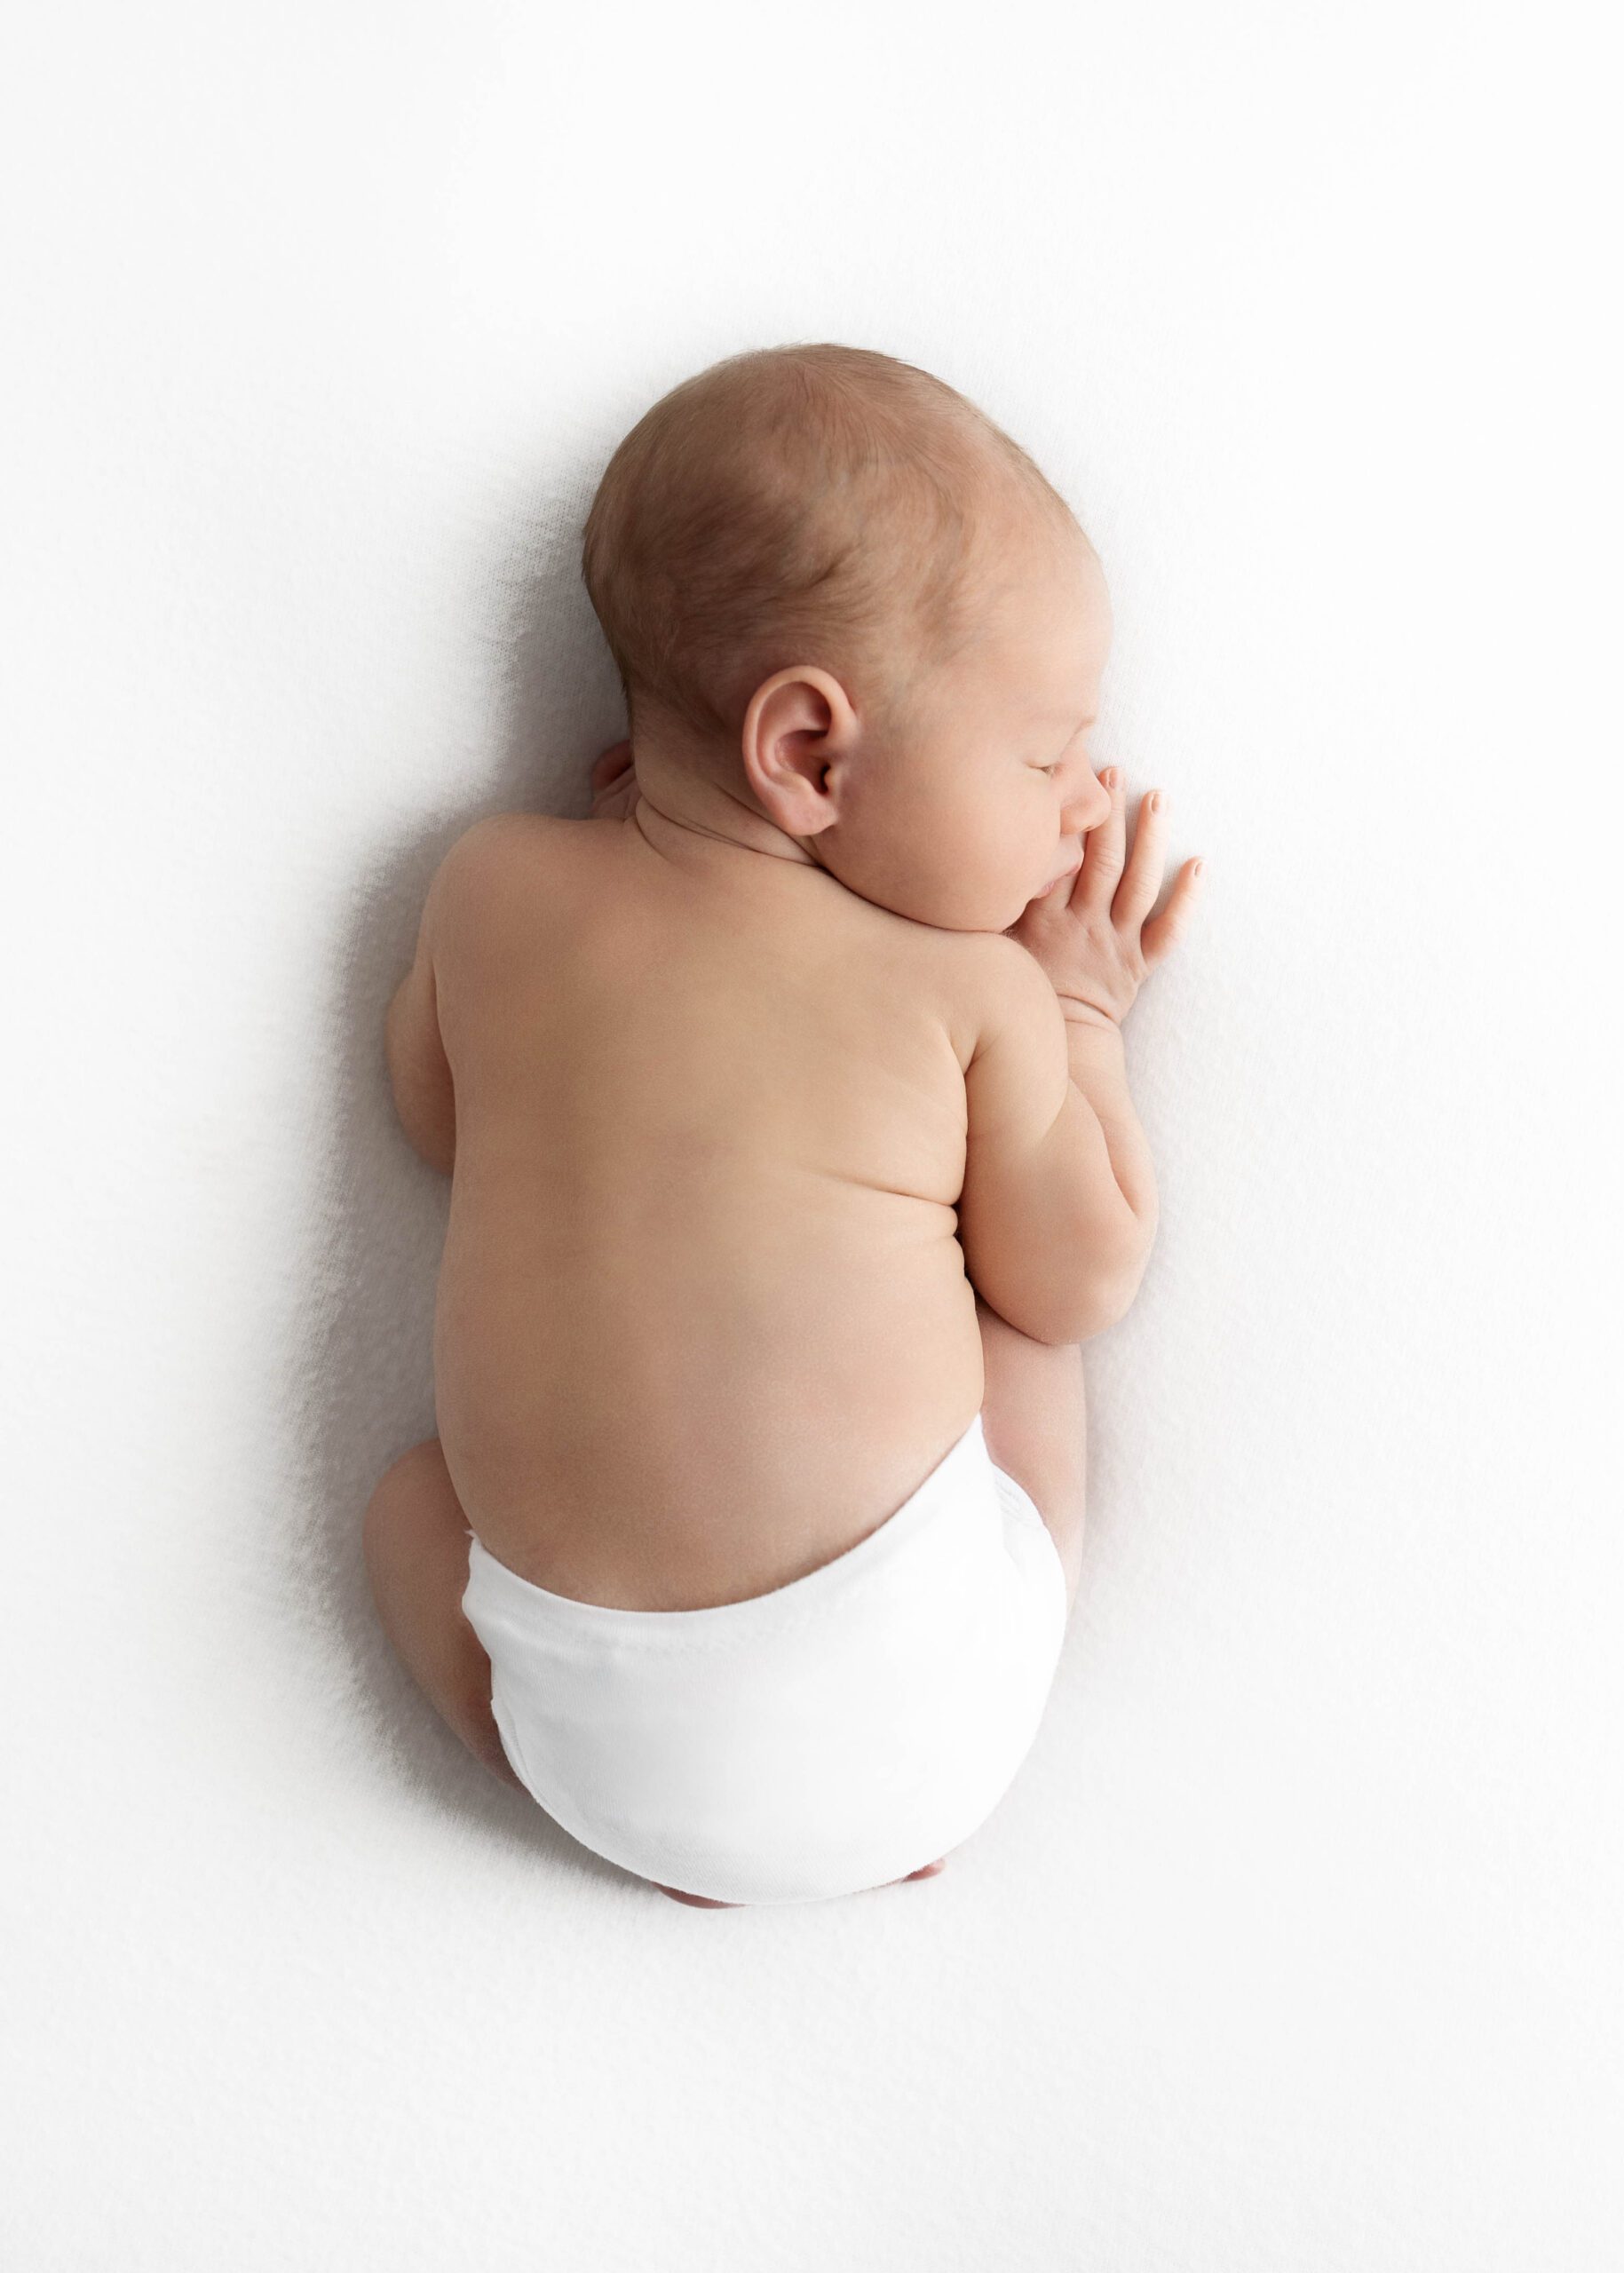 newborn with white diaper sleeping on tummy